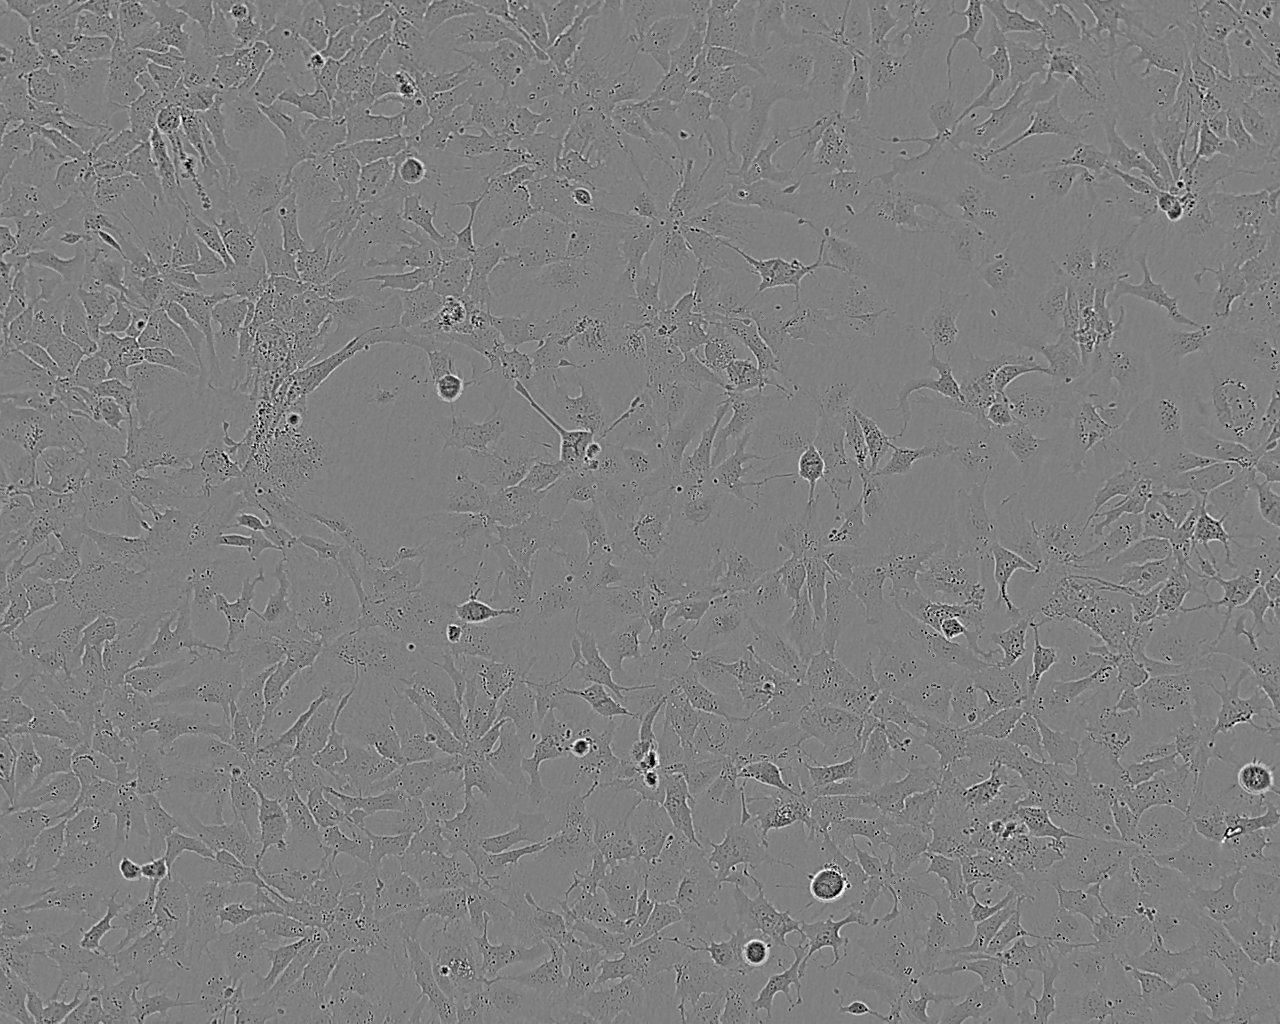 SNU-423 Cell|人肝癌细胞